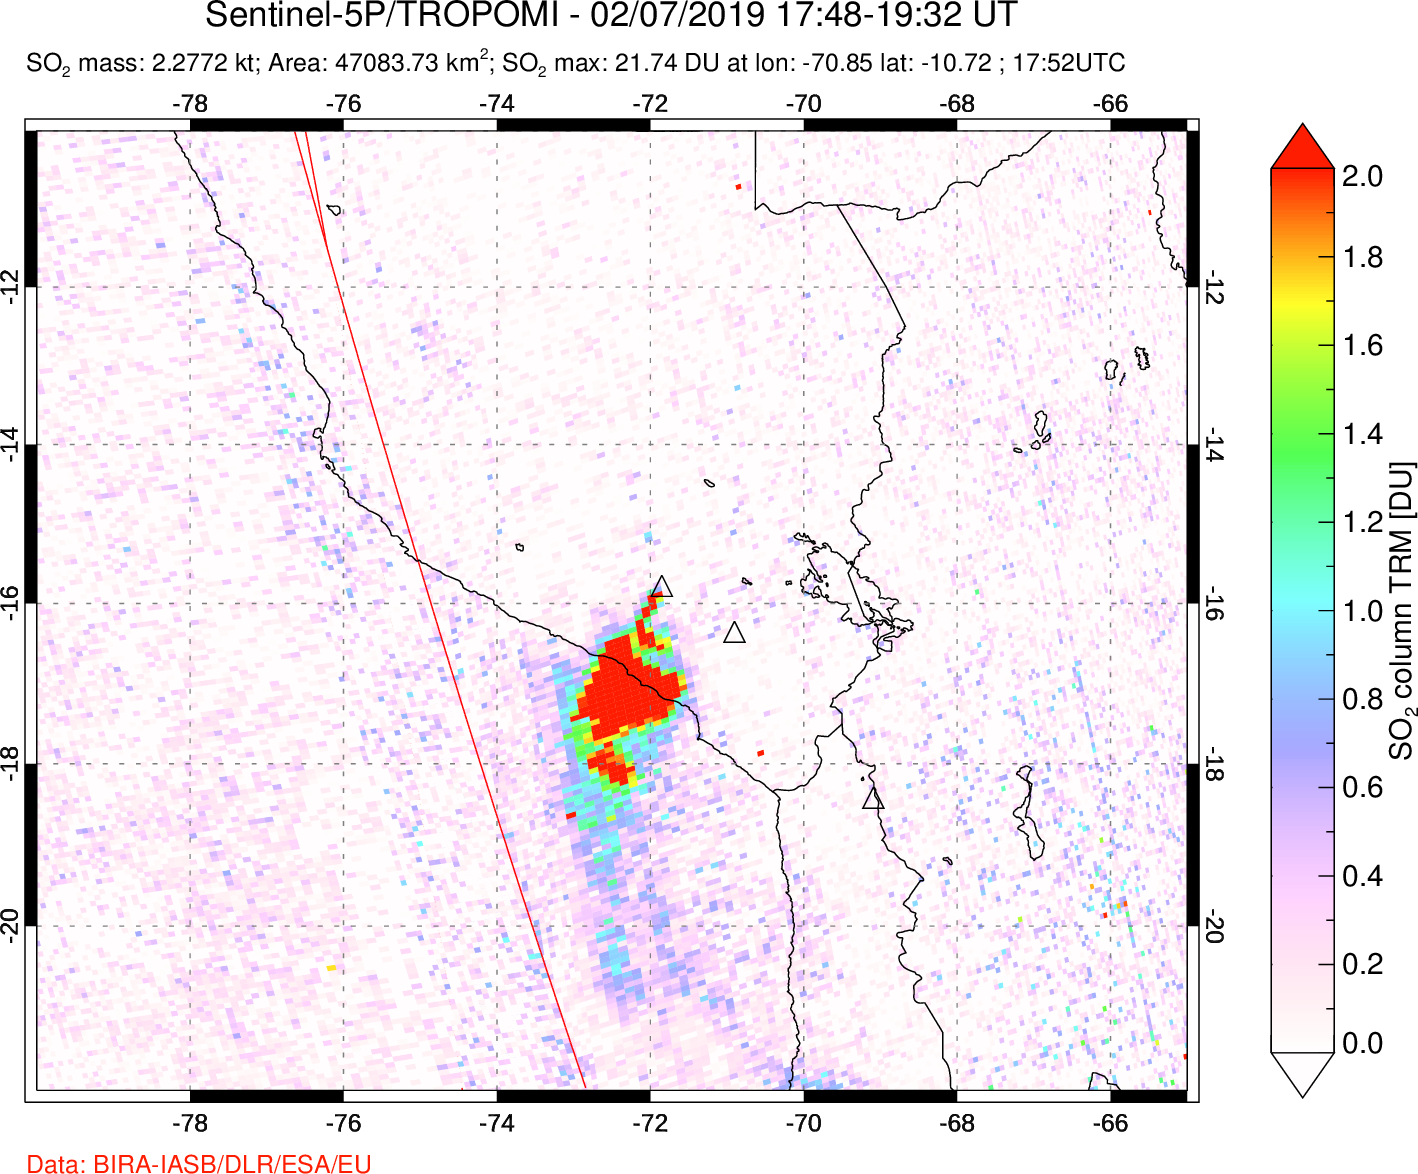 A sulfur dioxide image over Peru on Feb 07, 2019.